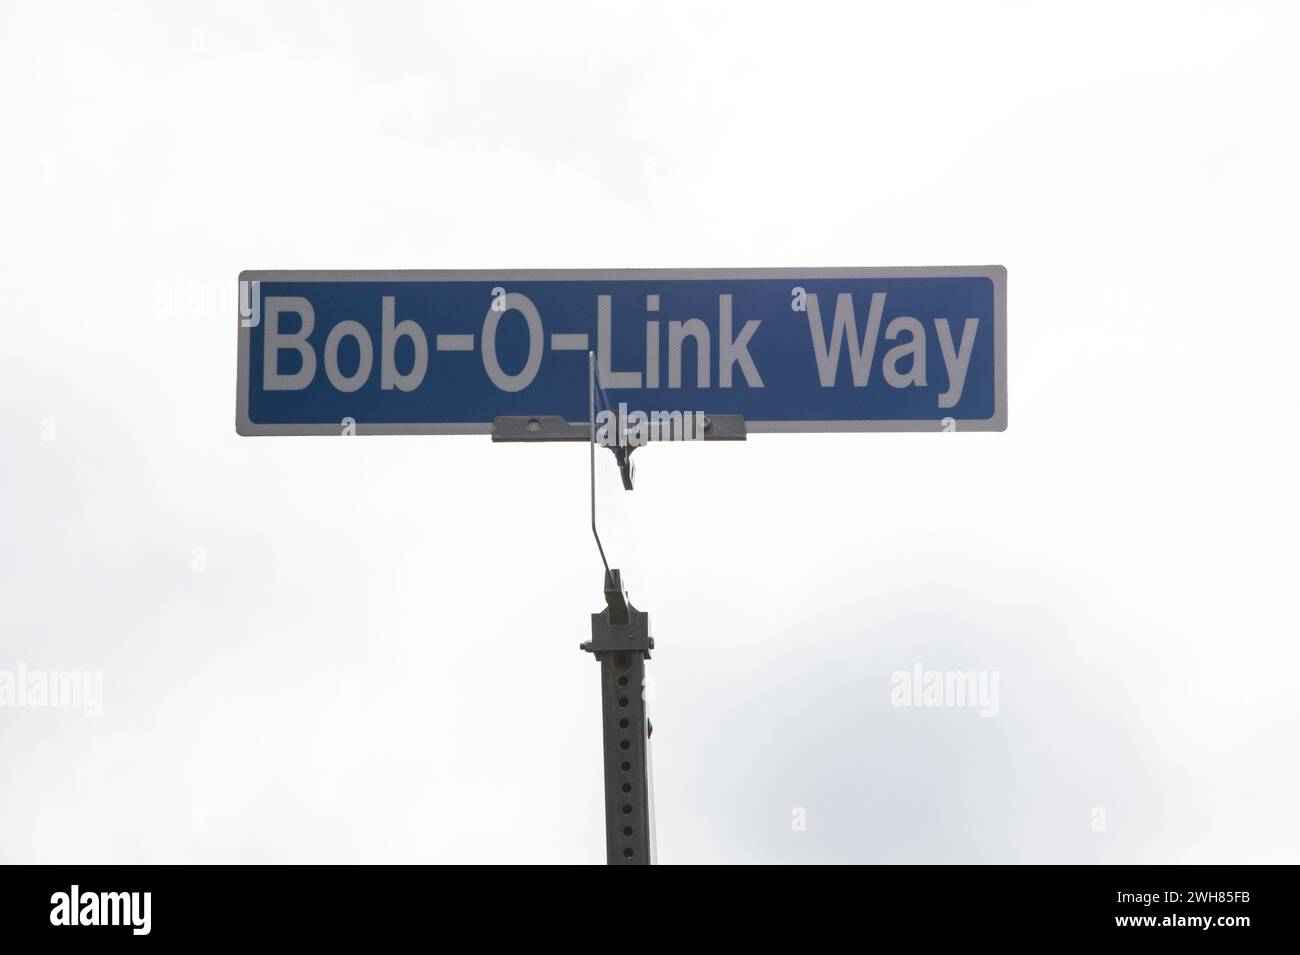 Bob-O-Link Way street sign in Nanaimo, British Columbia, Canada Stock Photo